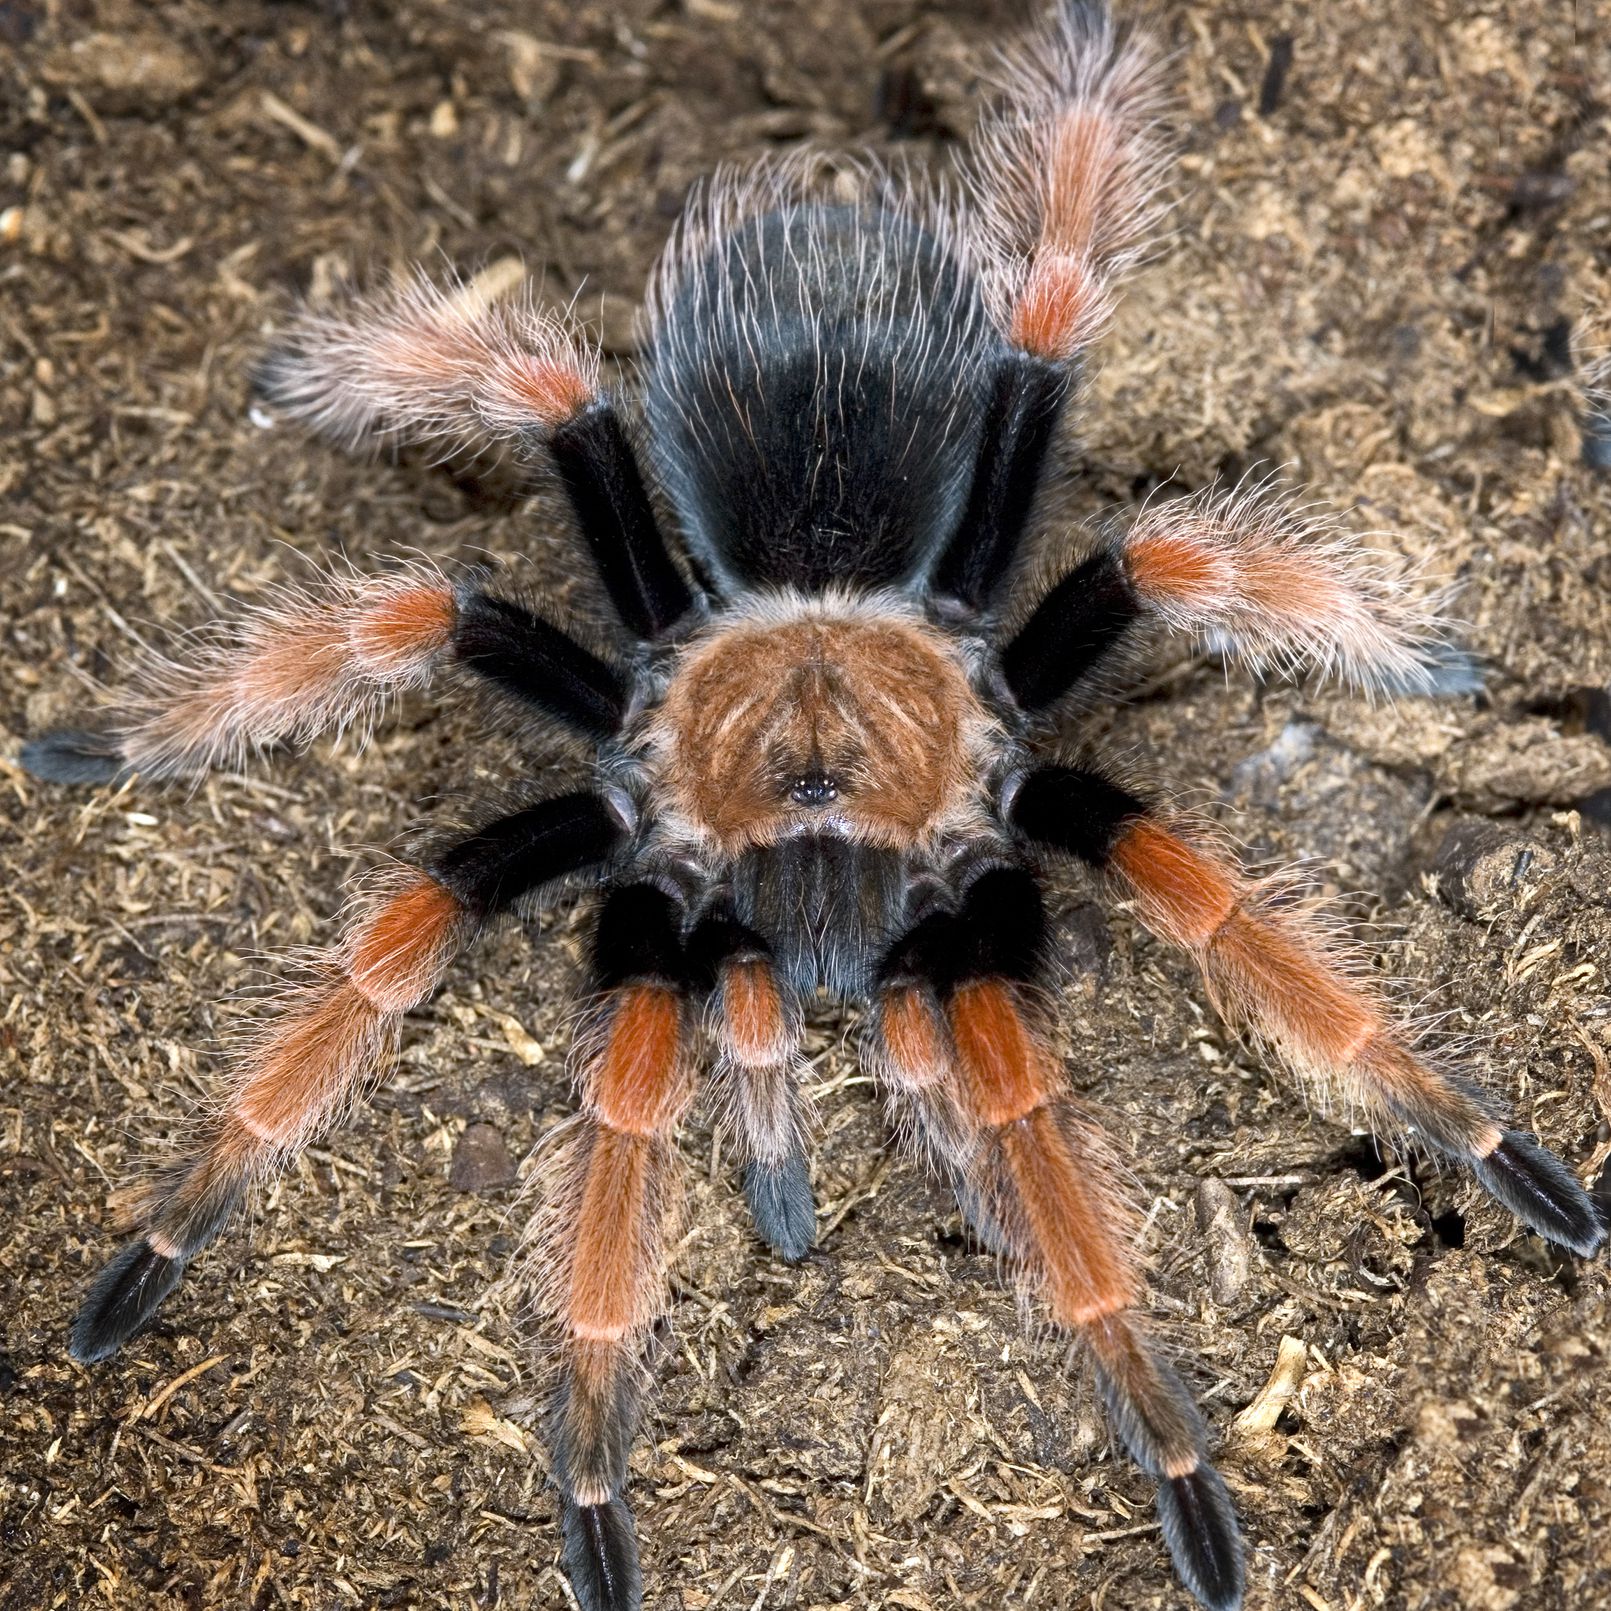 Mexican redleg tarantula on mulch